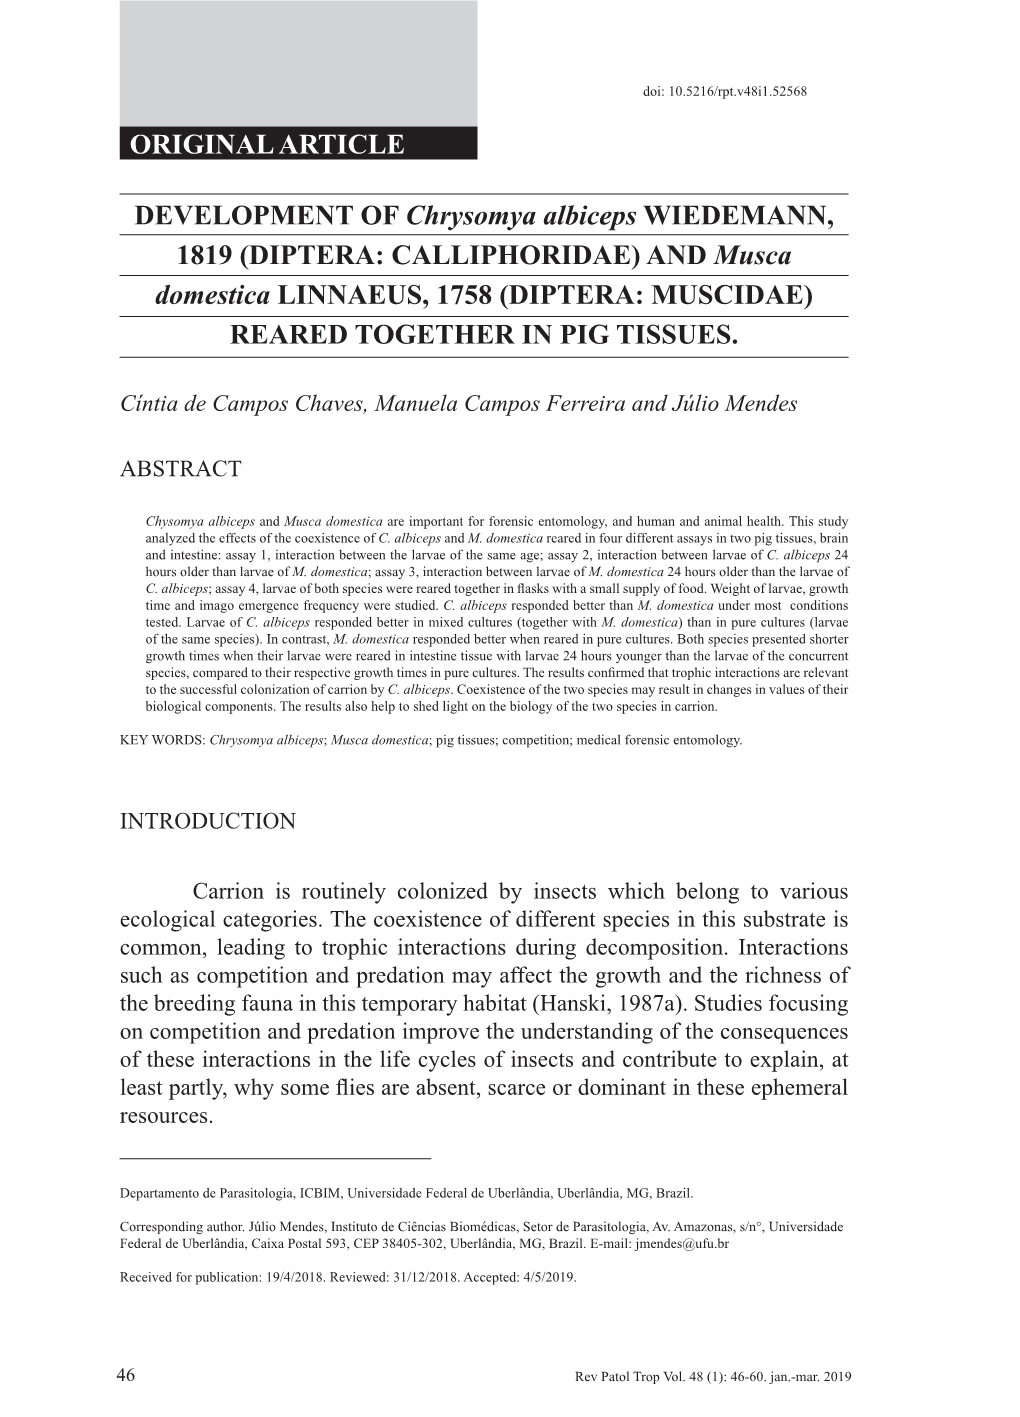 ORIGINAL ARTICLE DEVELOPMENT of Chrysomya Albiceps